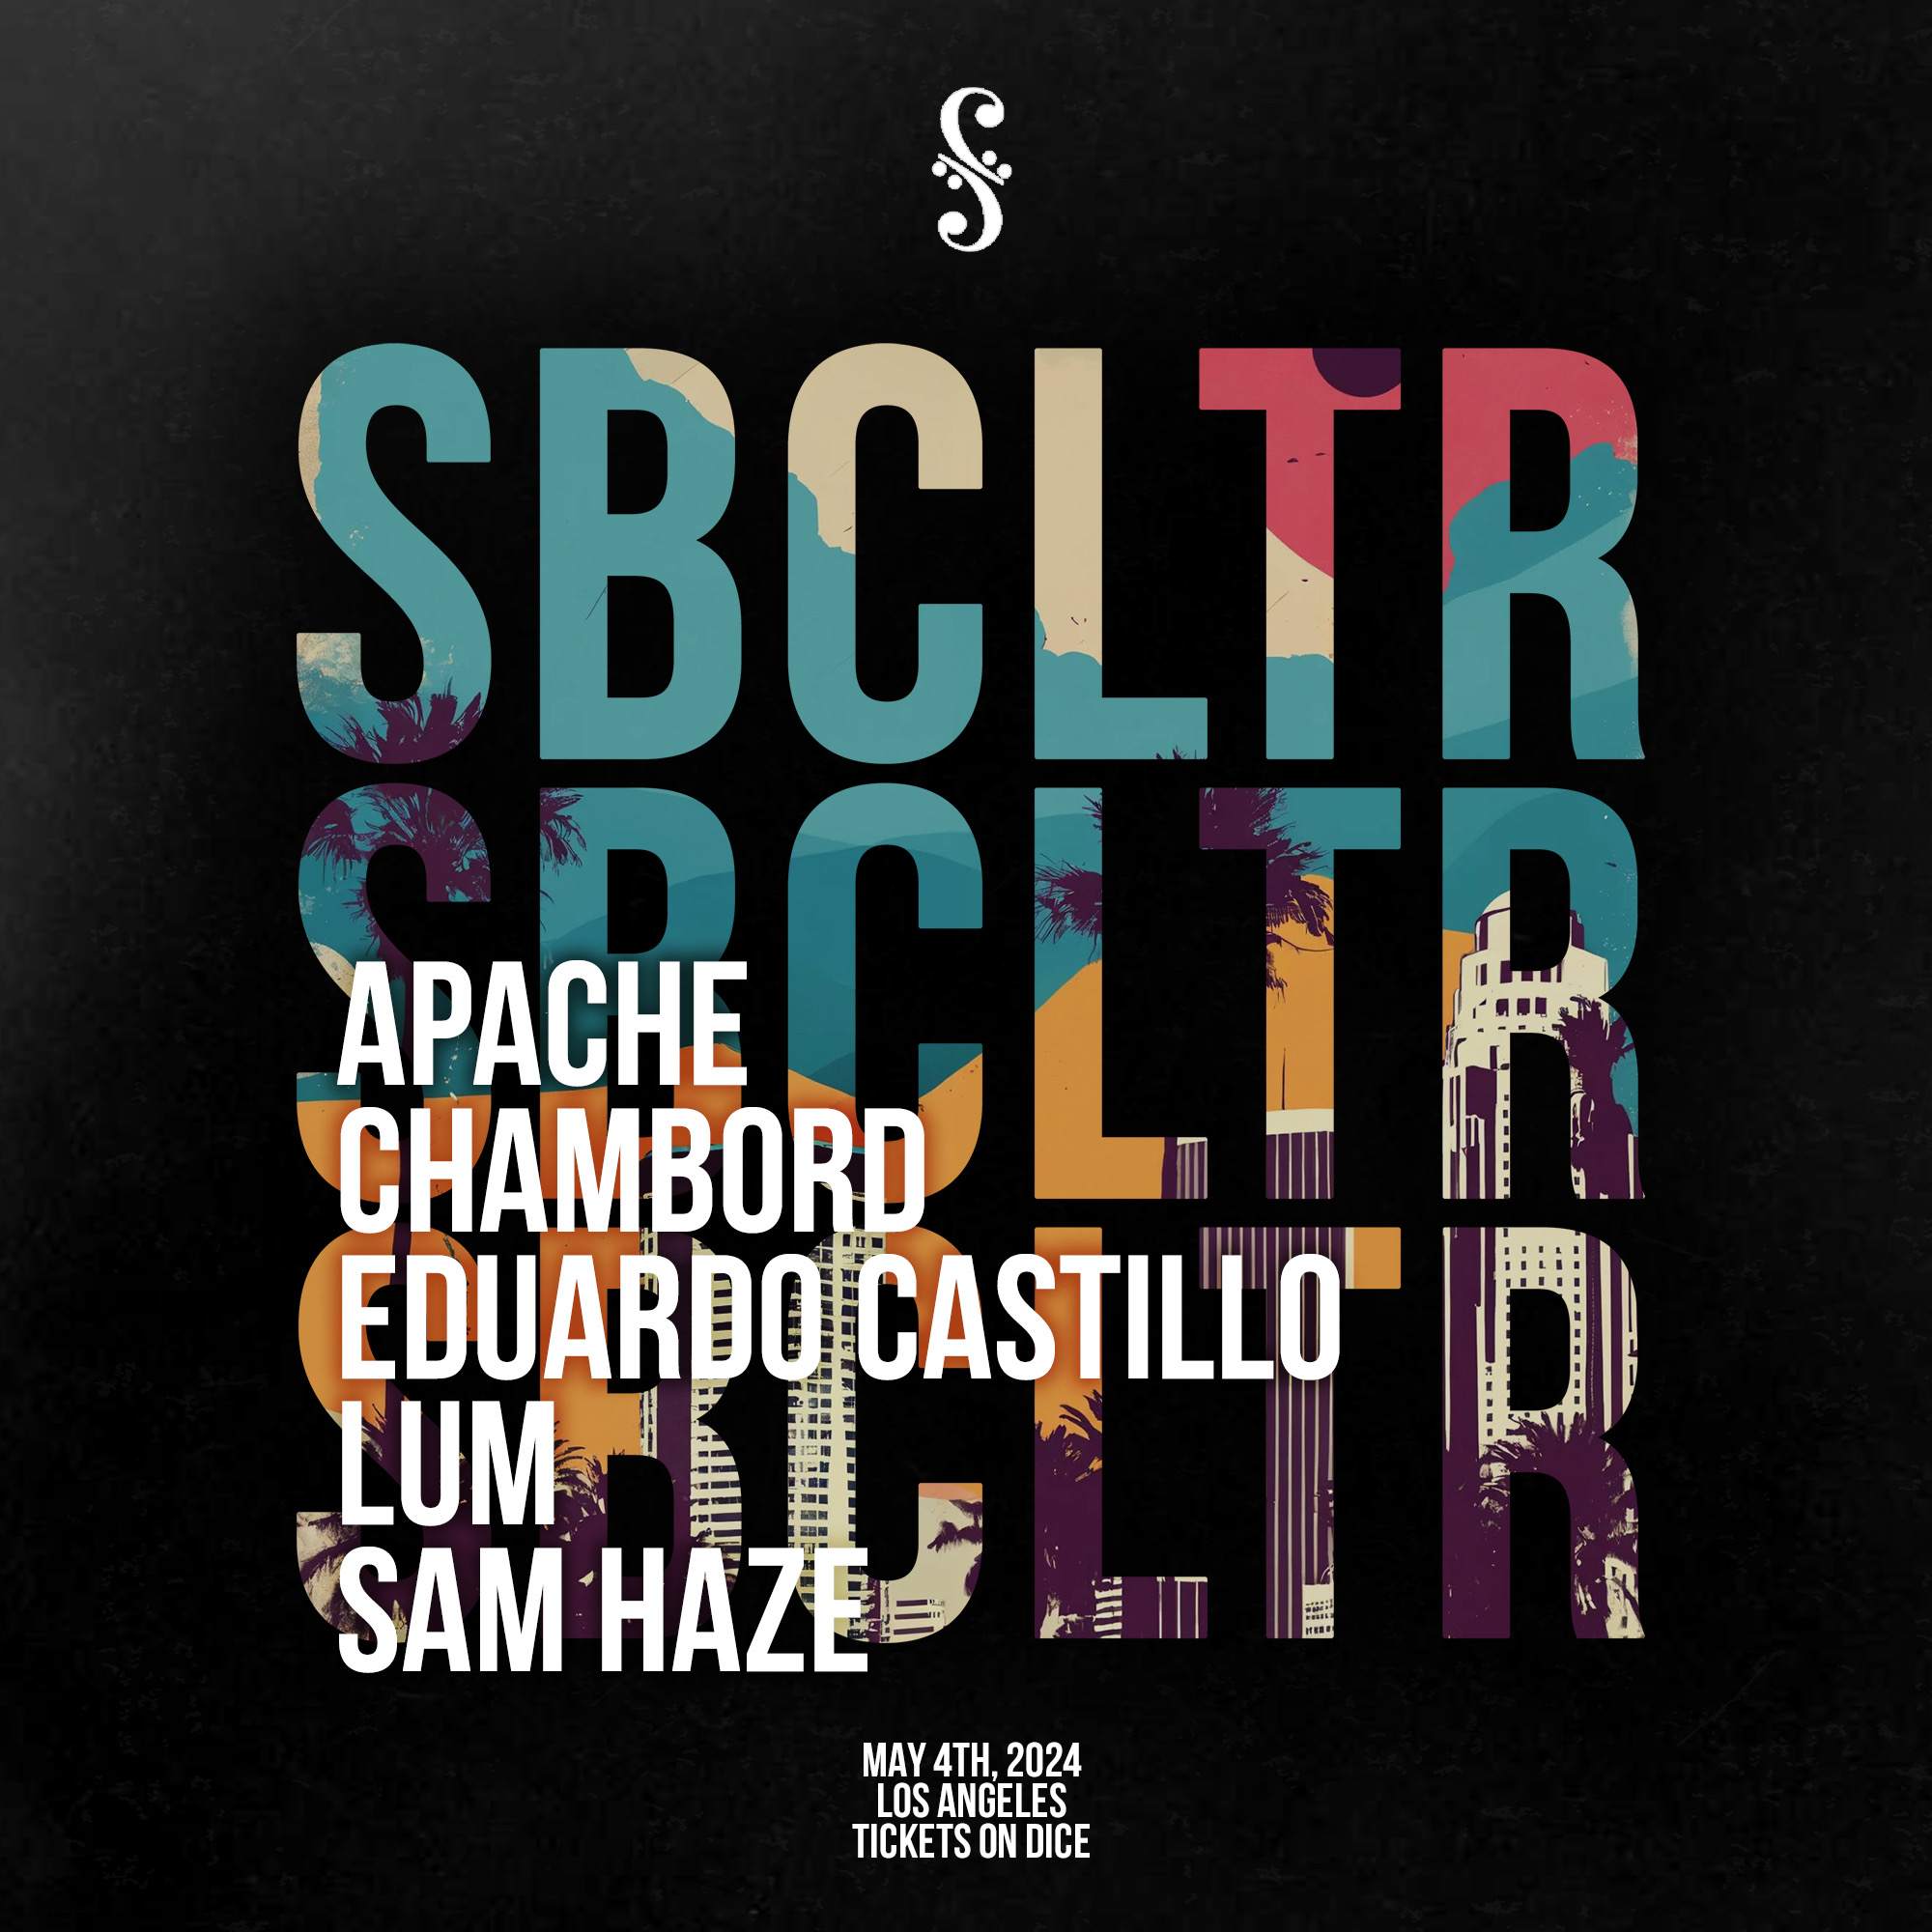 SBCLTR presents: LUM, Eduardo Castillo, Apache, Chambord - フライヤー表